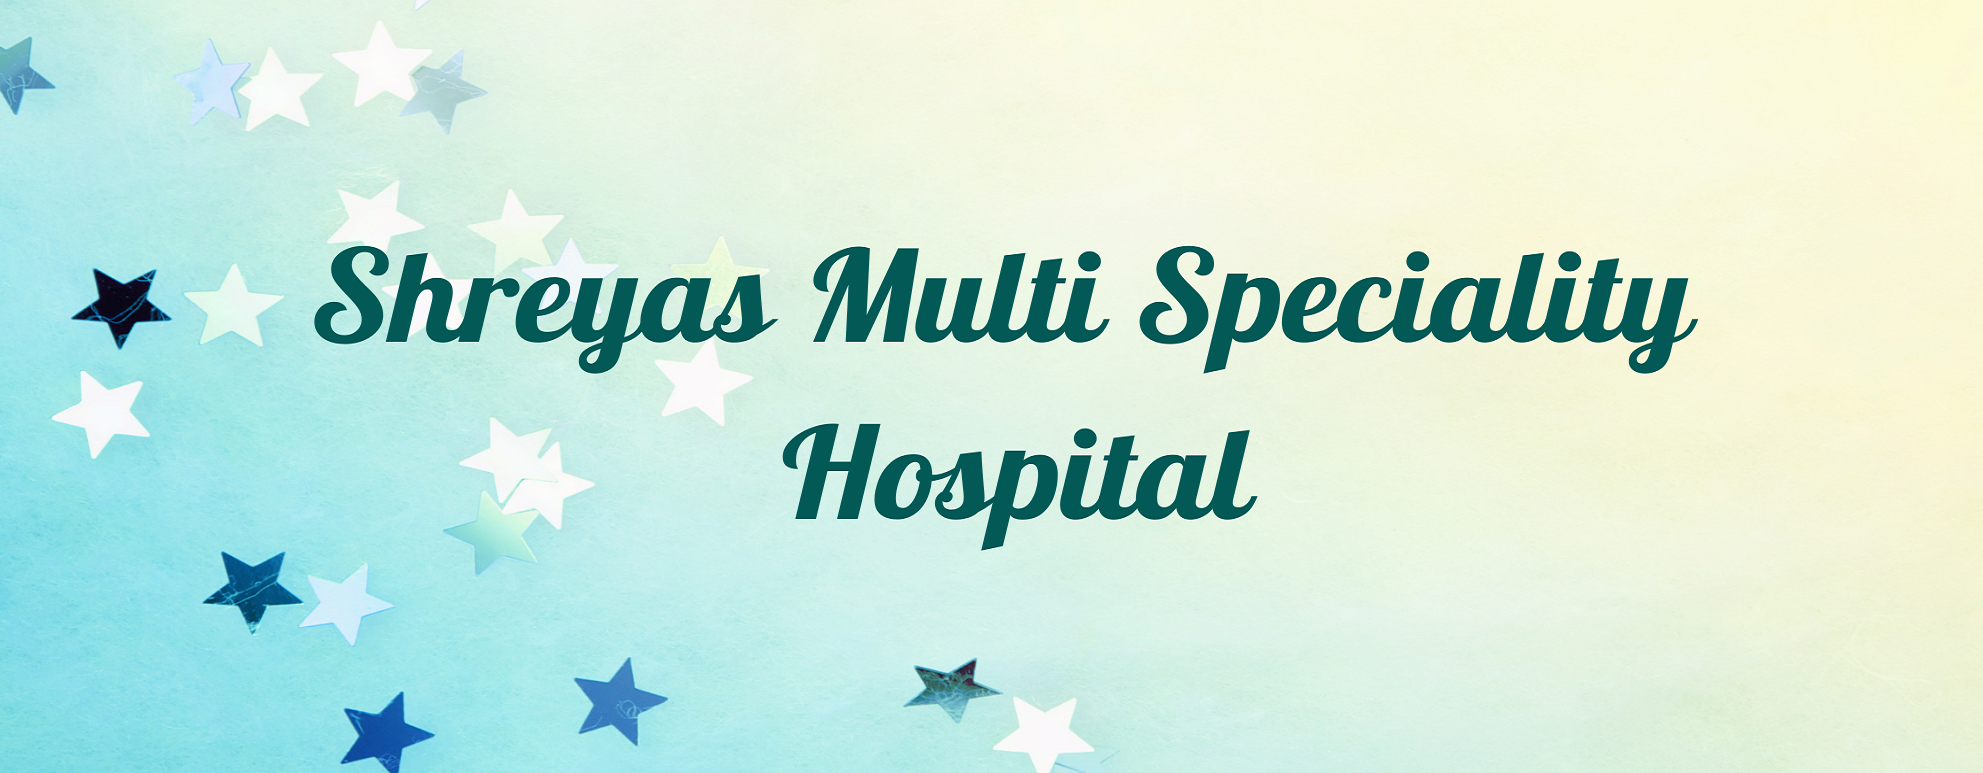  Shreyas Multi Speciality Hospital 